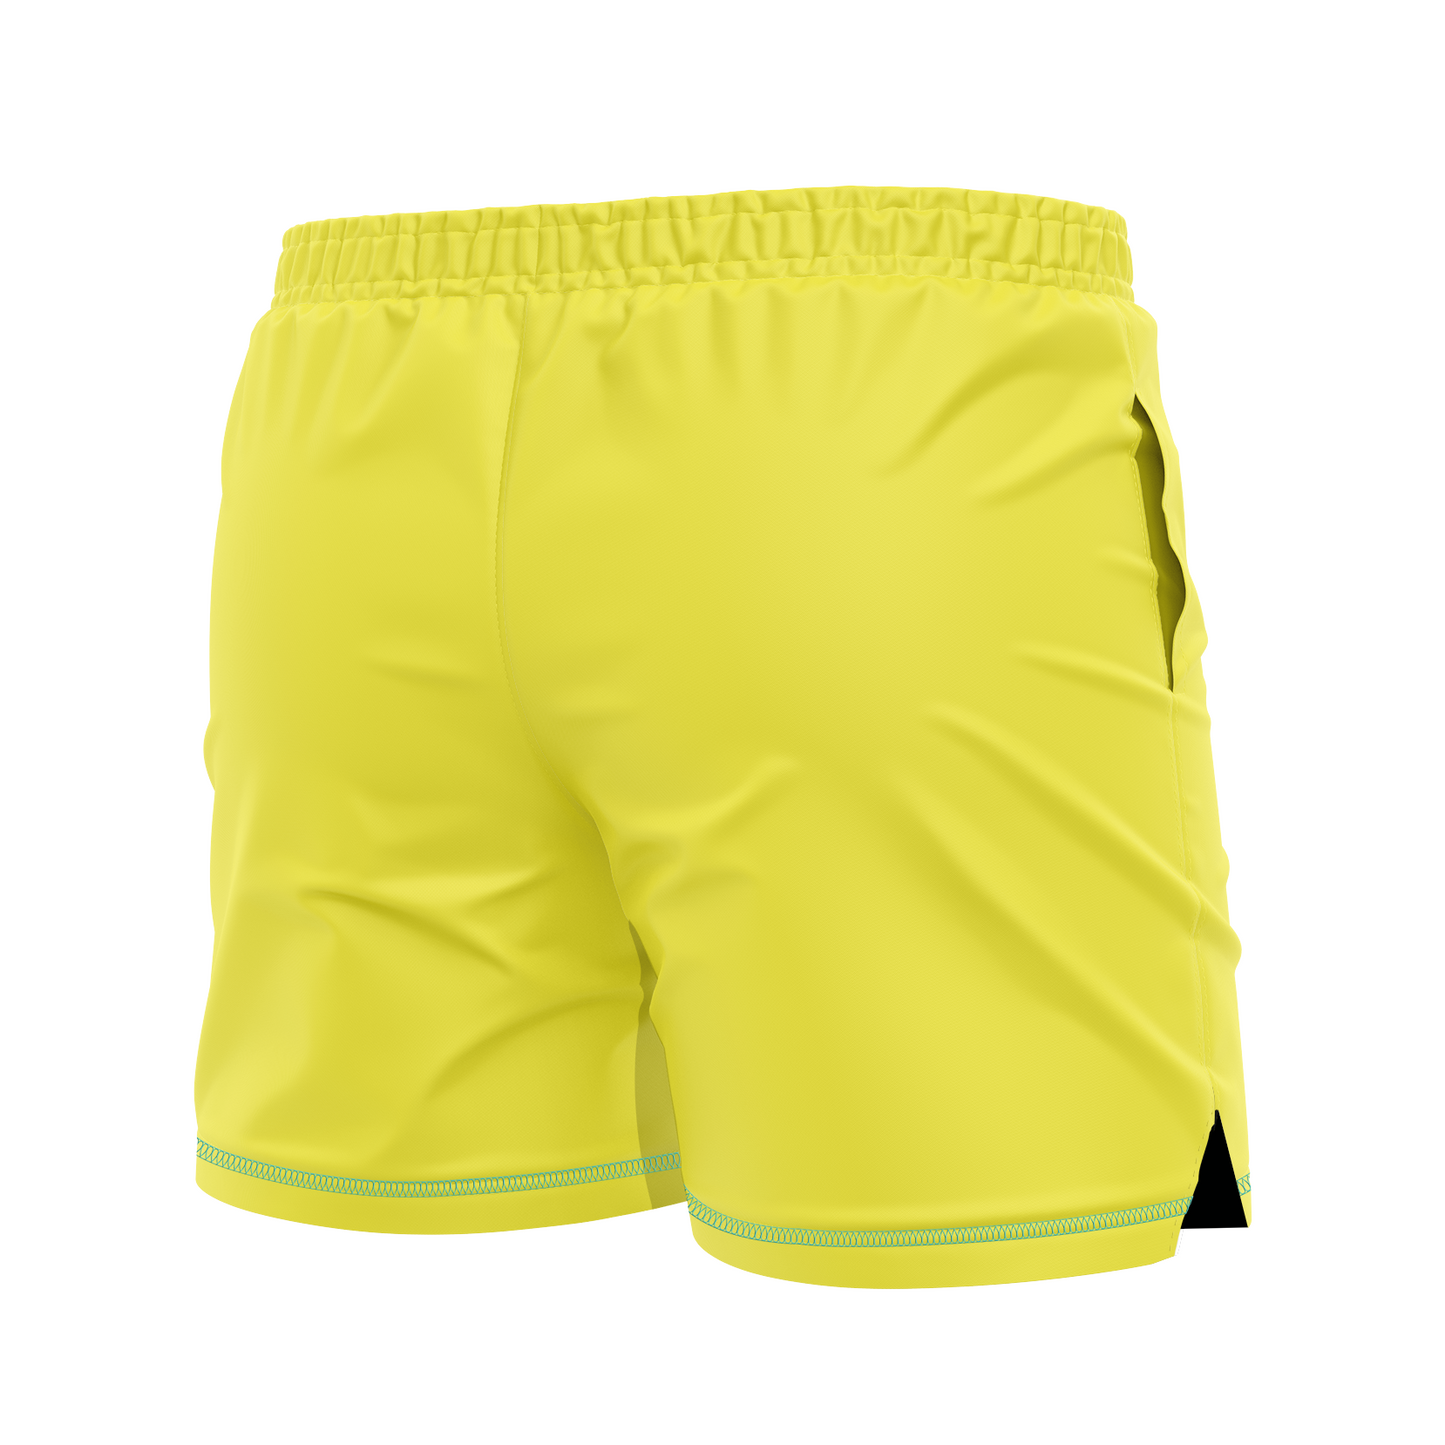 Death by Wristlock: Marfa Lights men's FC shorts, yellow